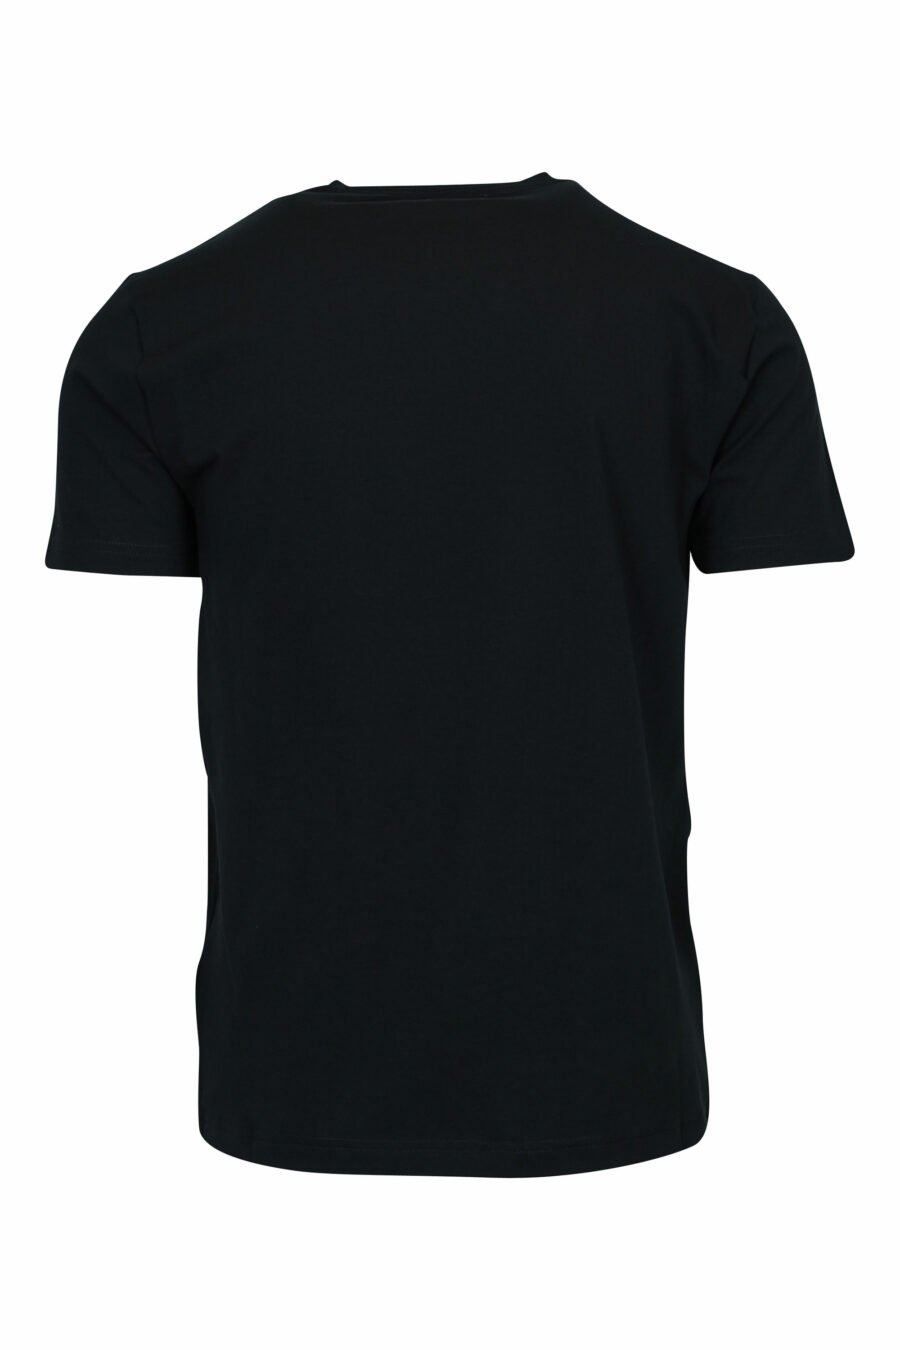 Camiseta negra con maxilogo "lux identity" dorado neón - 8057970672234 1